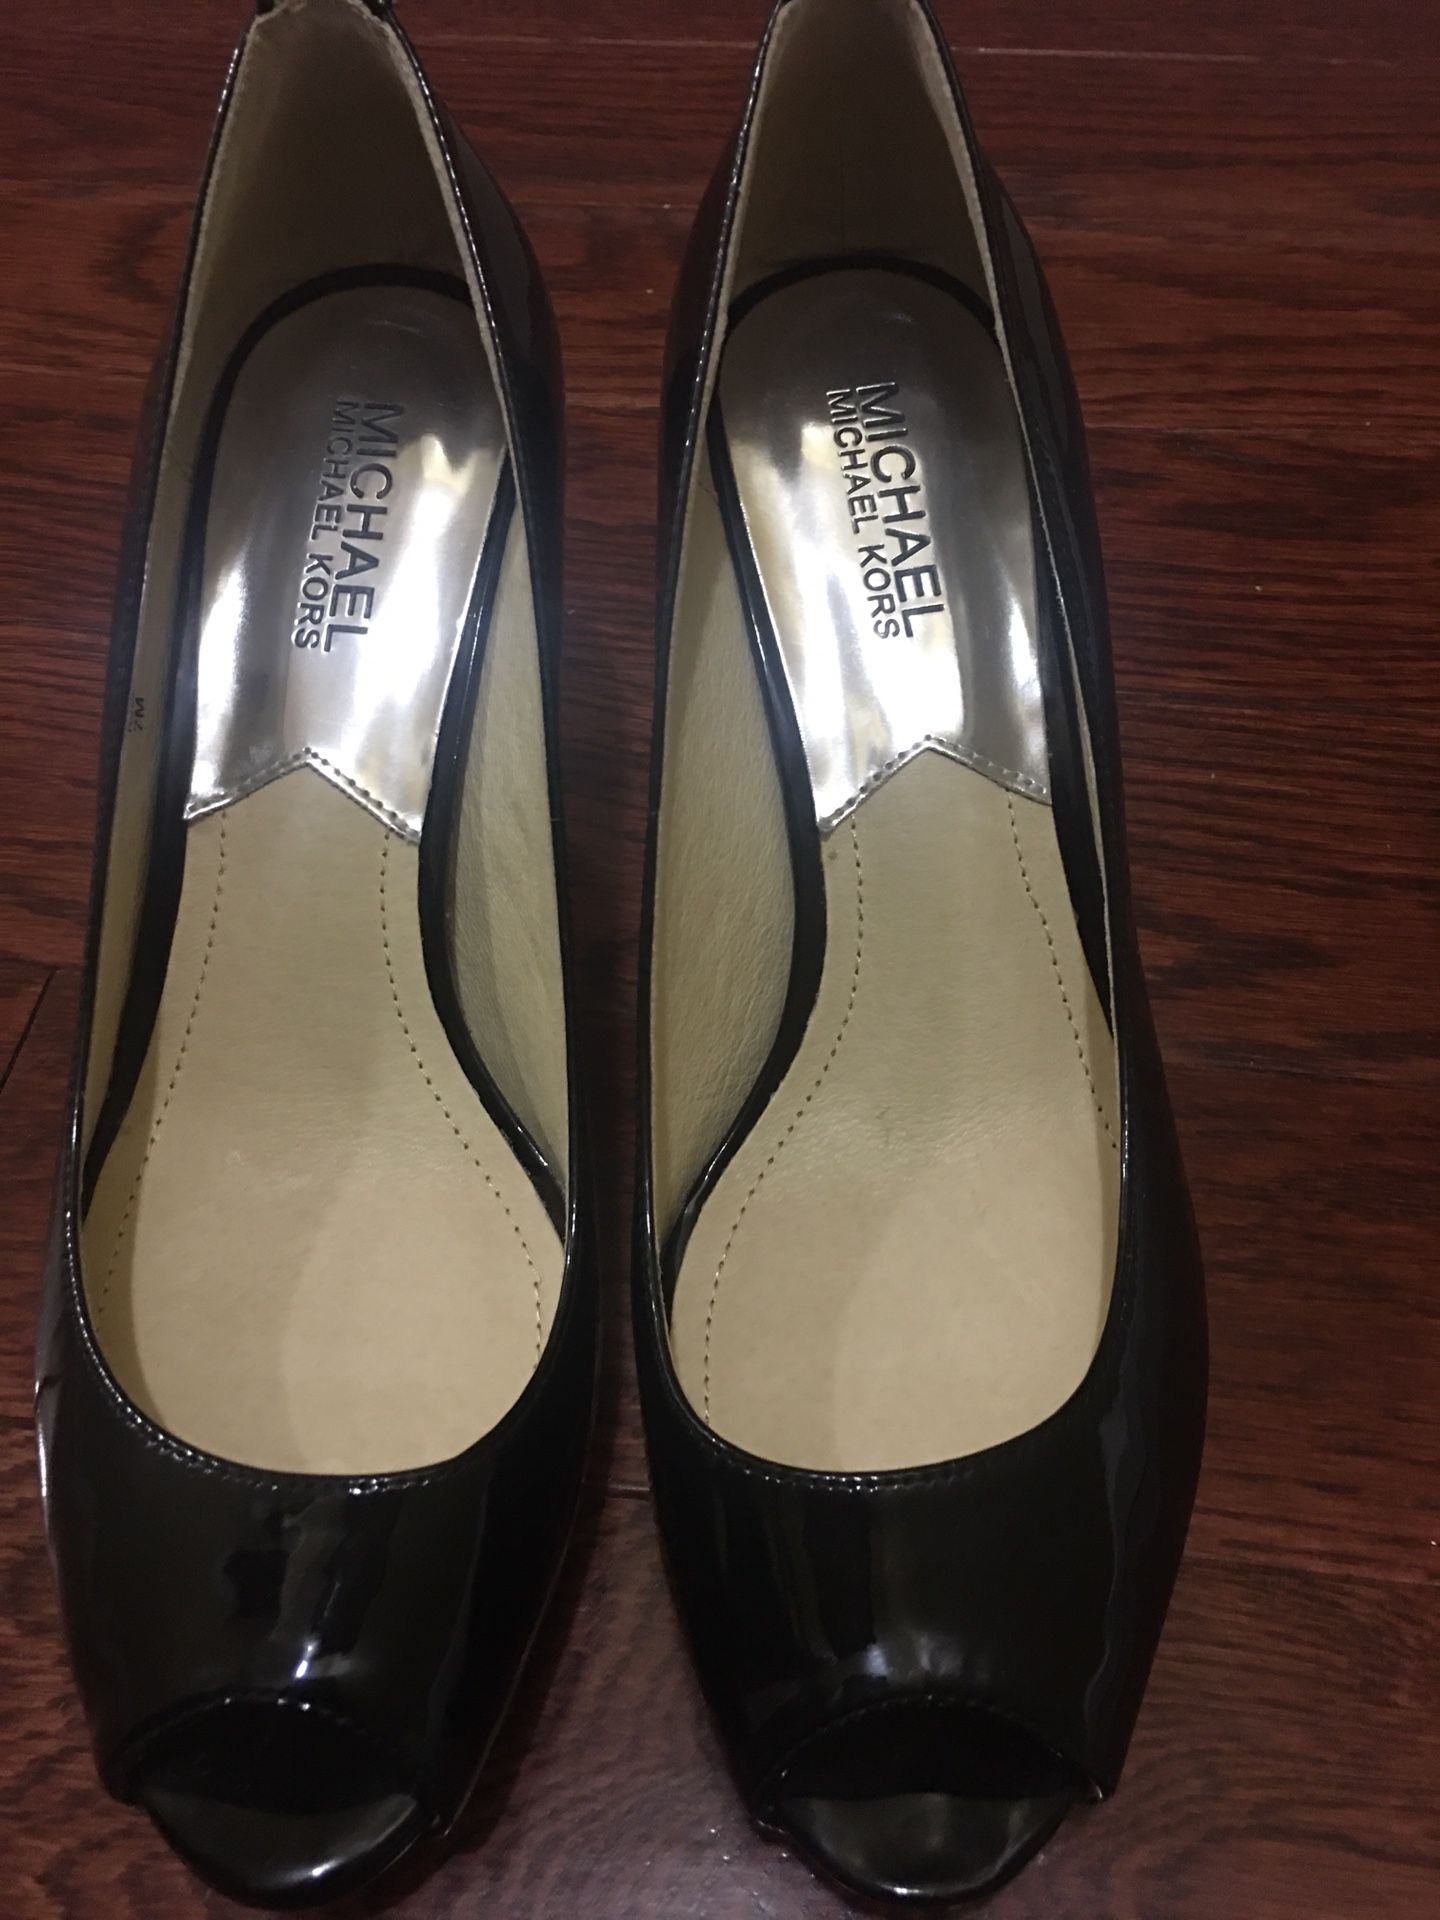 Michael Kors shoes size 7M for women